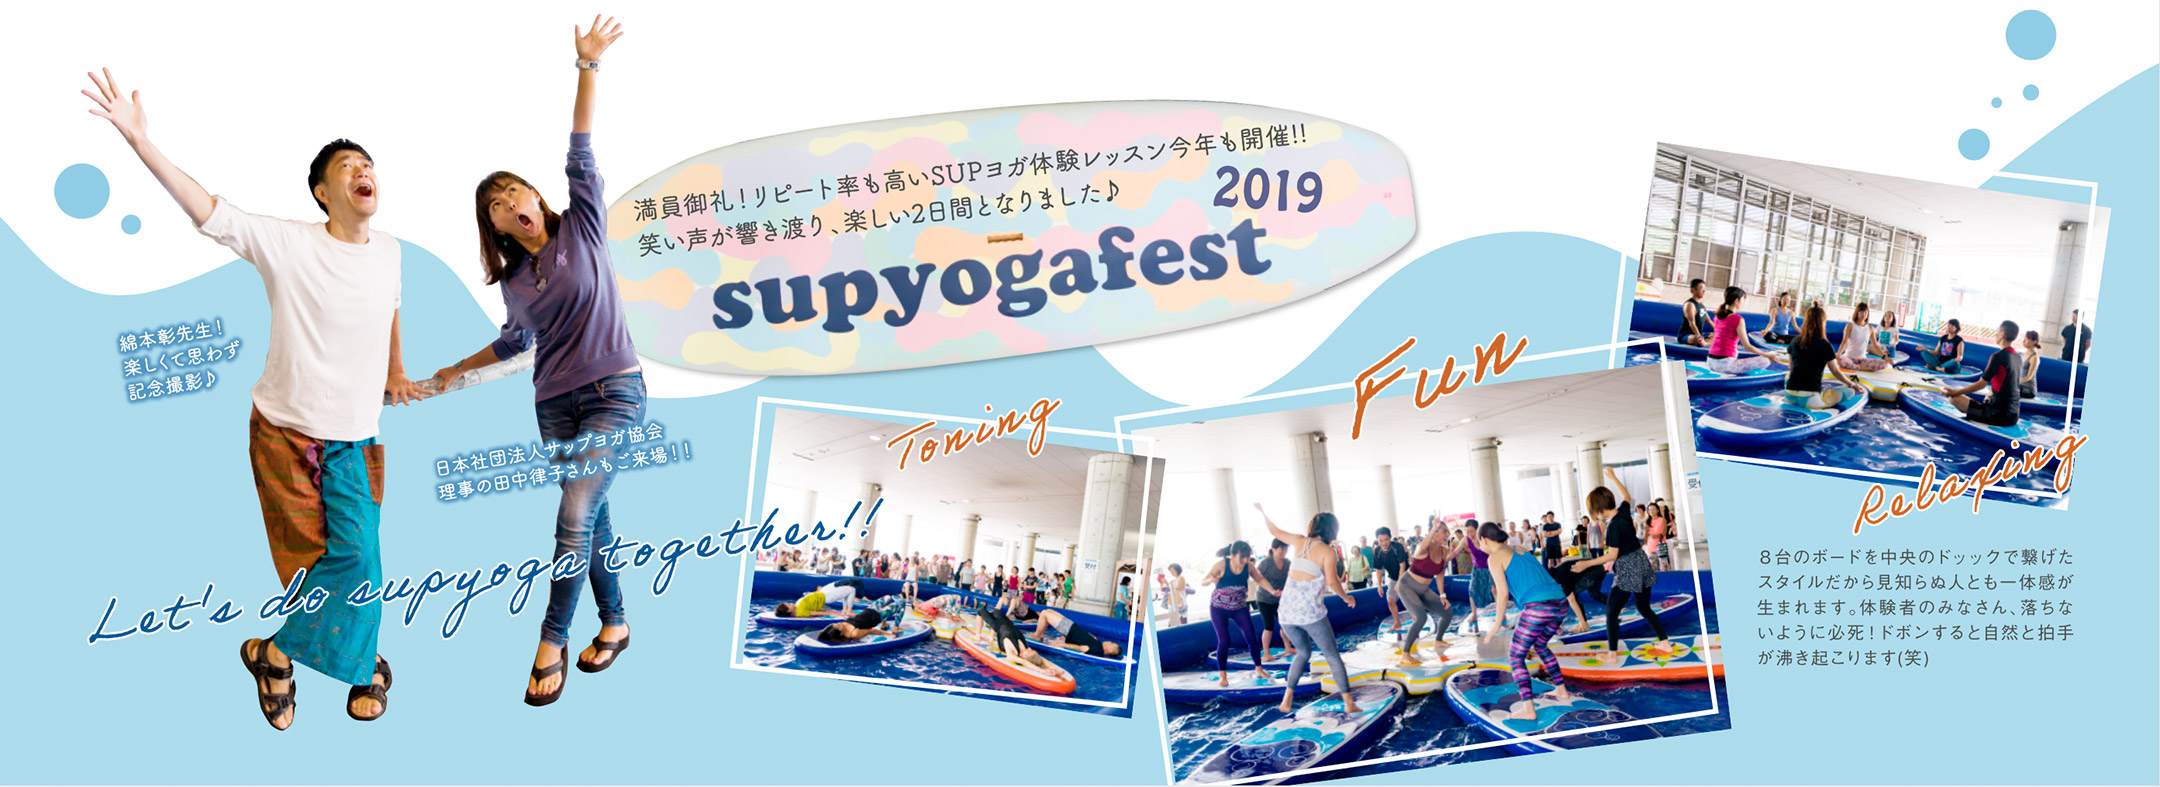 SUP YOGA FEST 2019